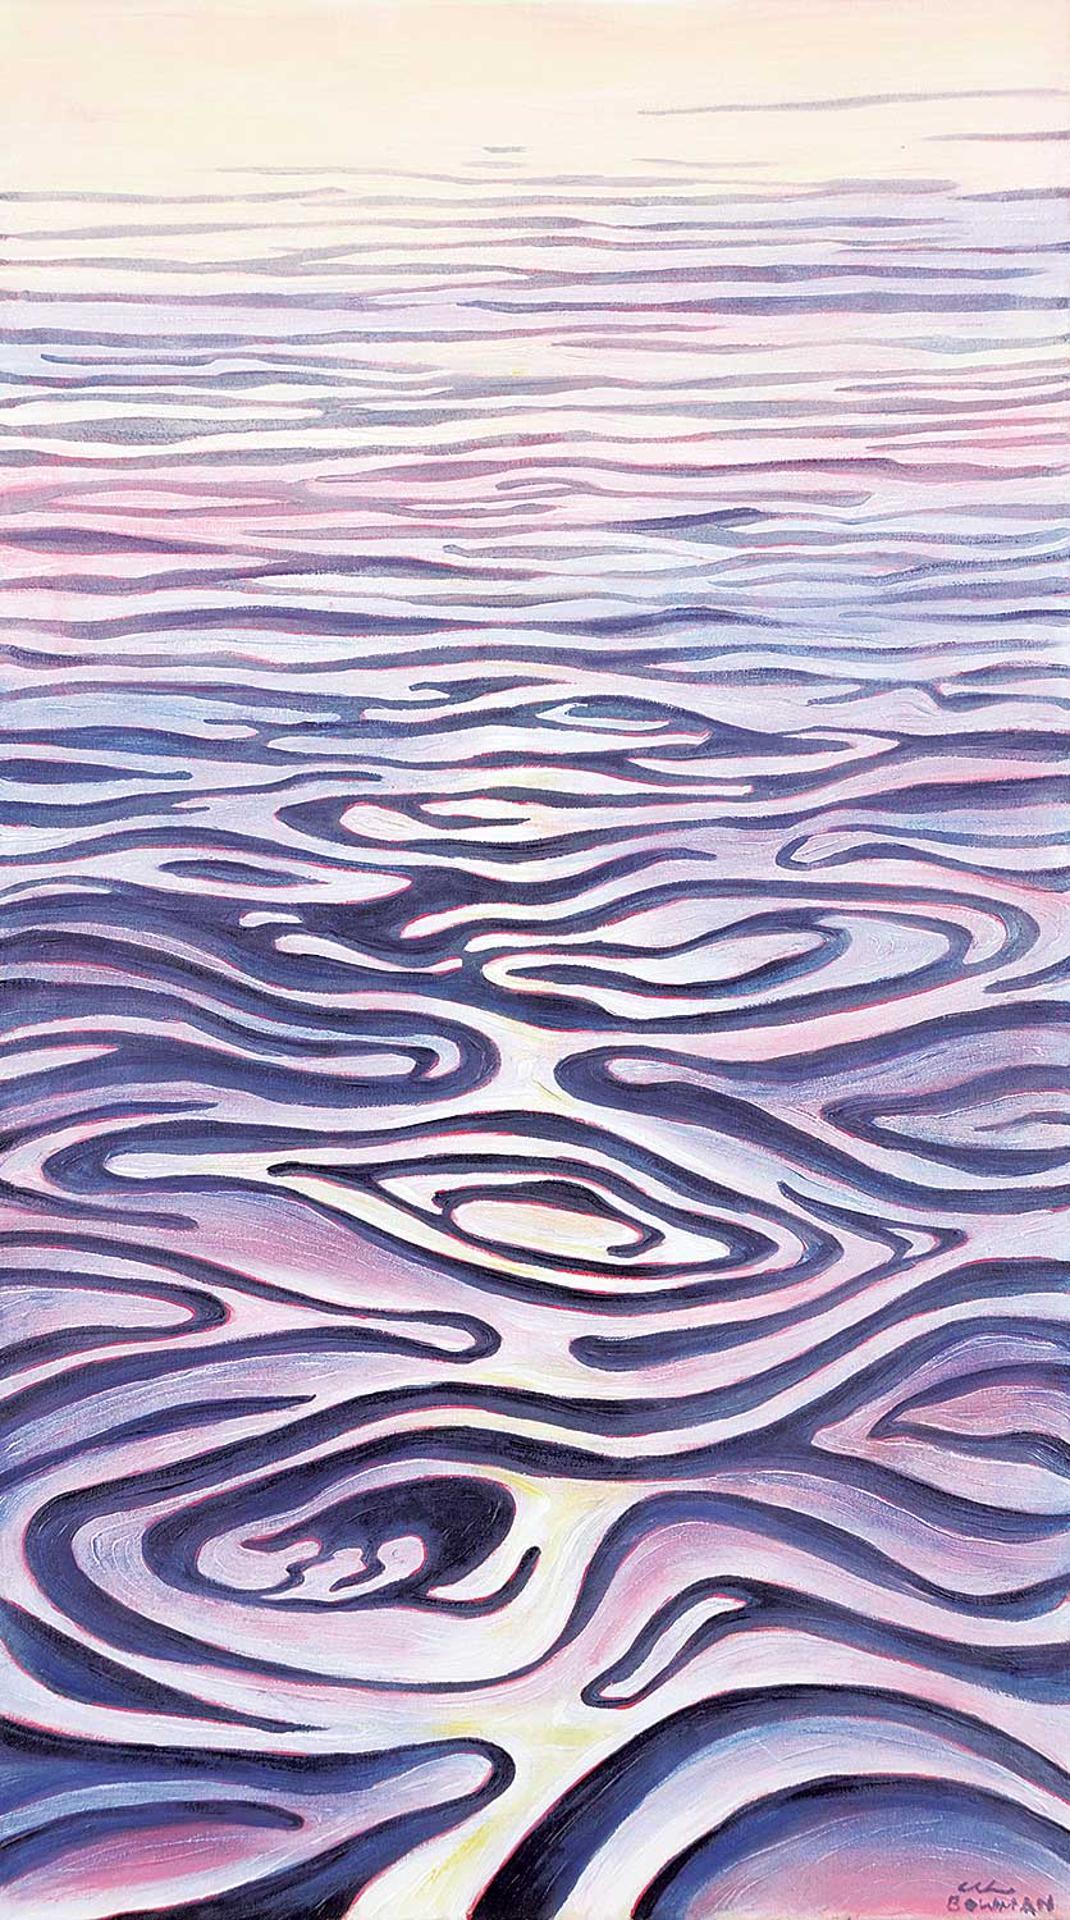 Chris Bowman (1981) - Untitled - Waves